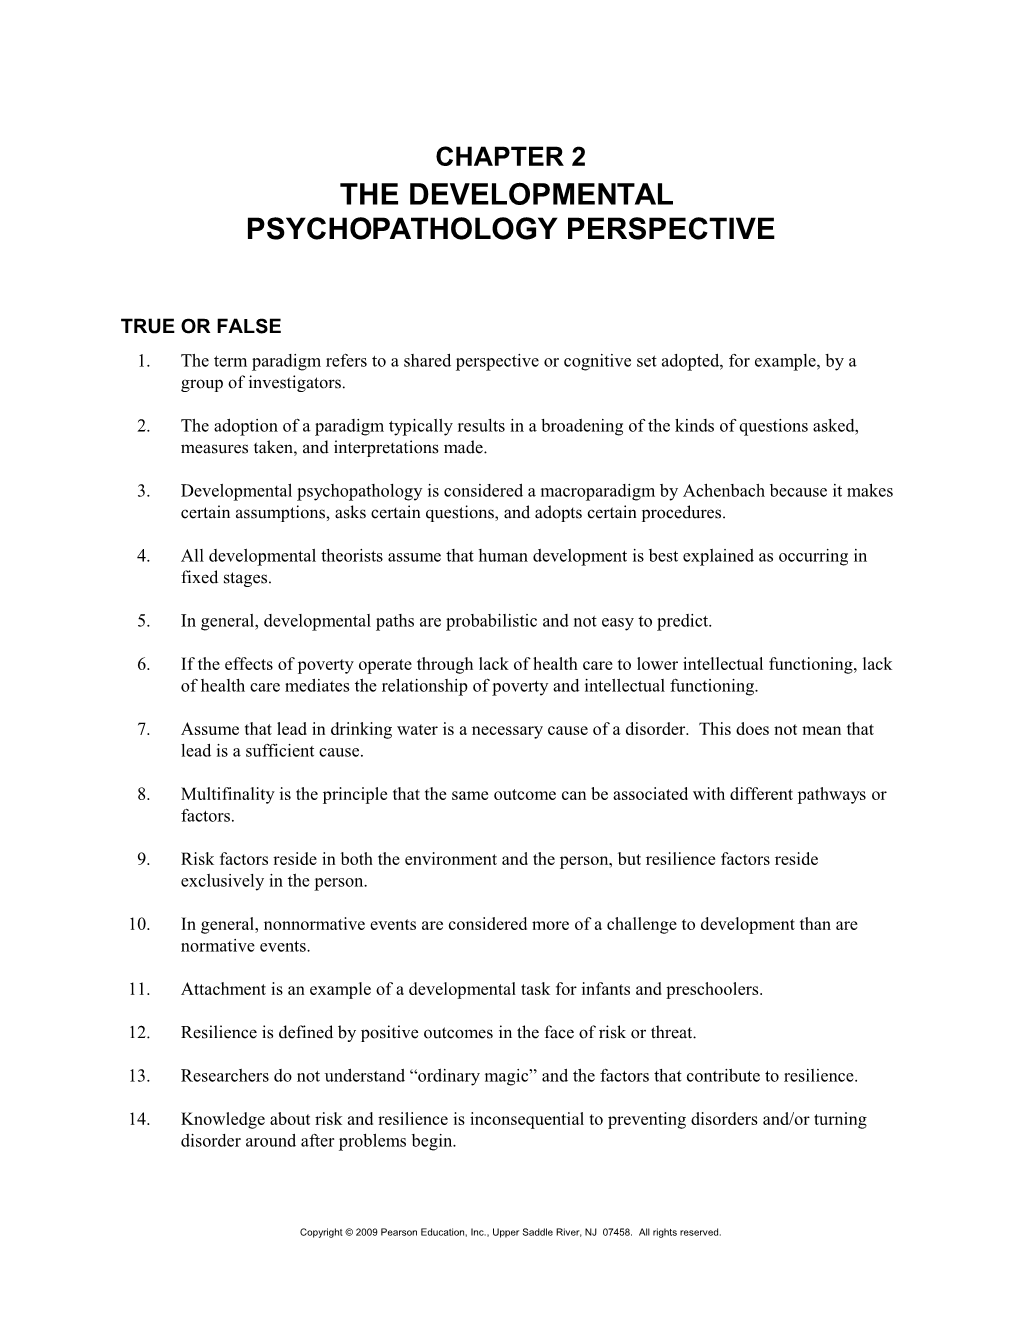 The Developmental Psychopathology Perspective